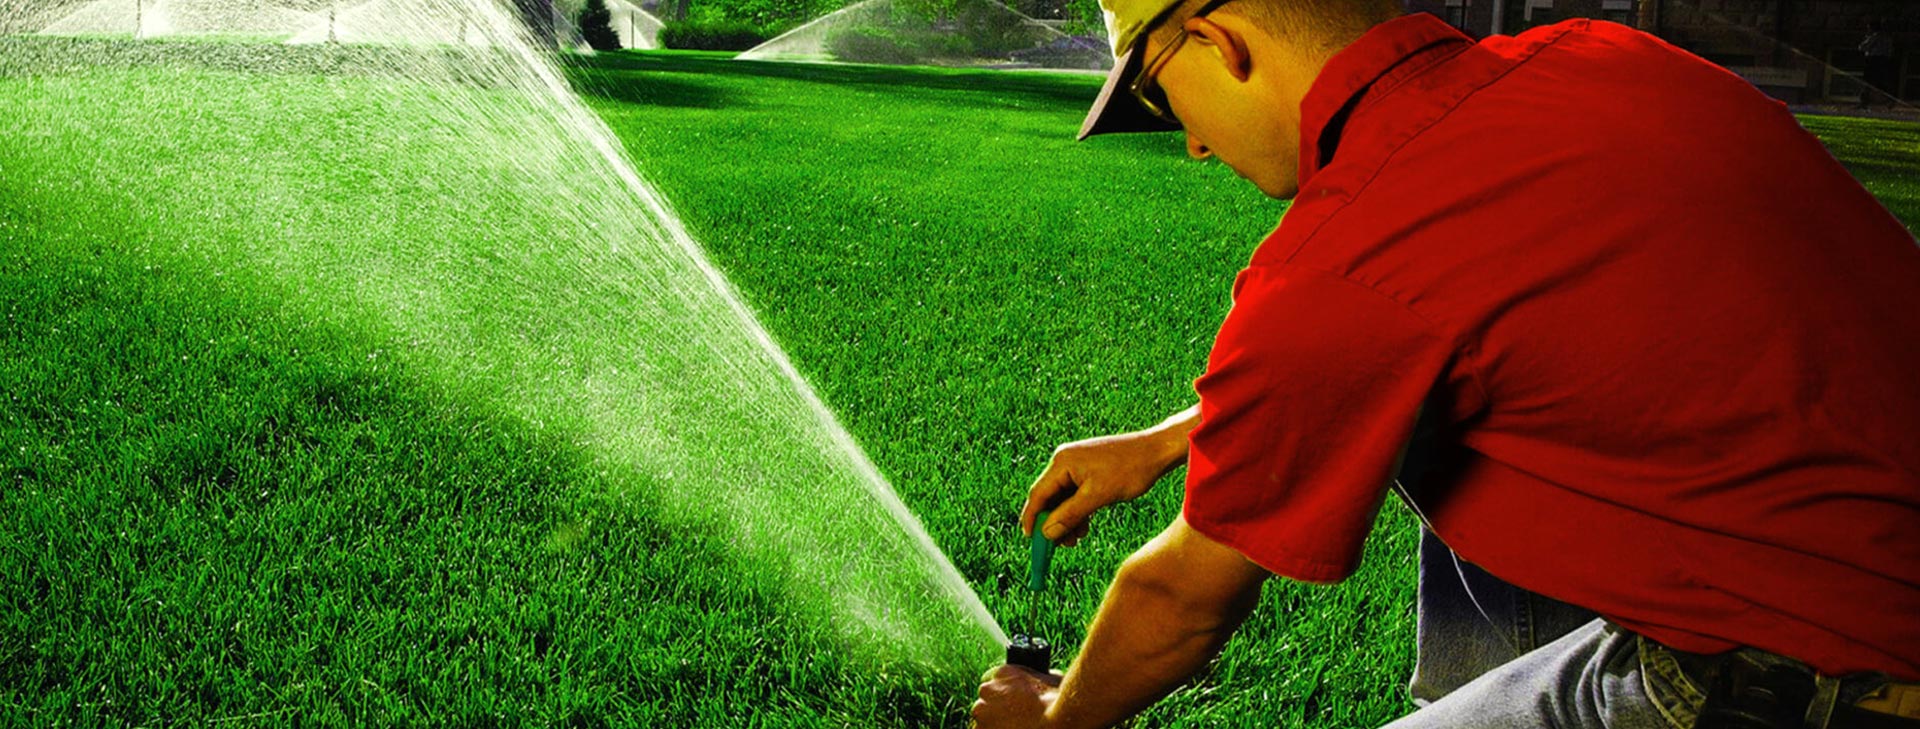 Arizona sprinkler irrigation repair and installation Arizona Irrigation Company